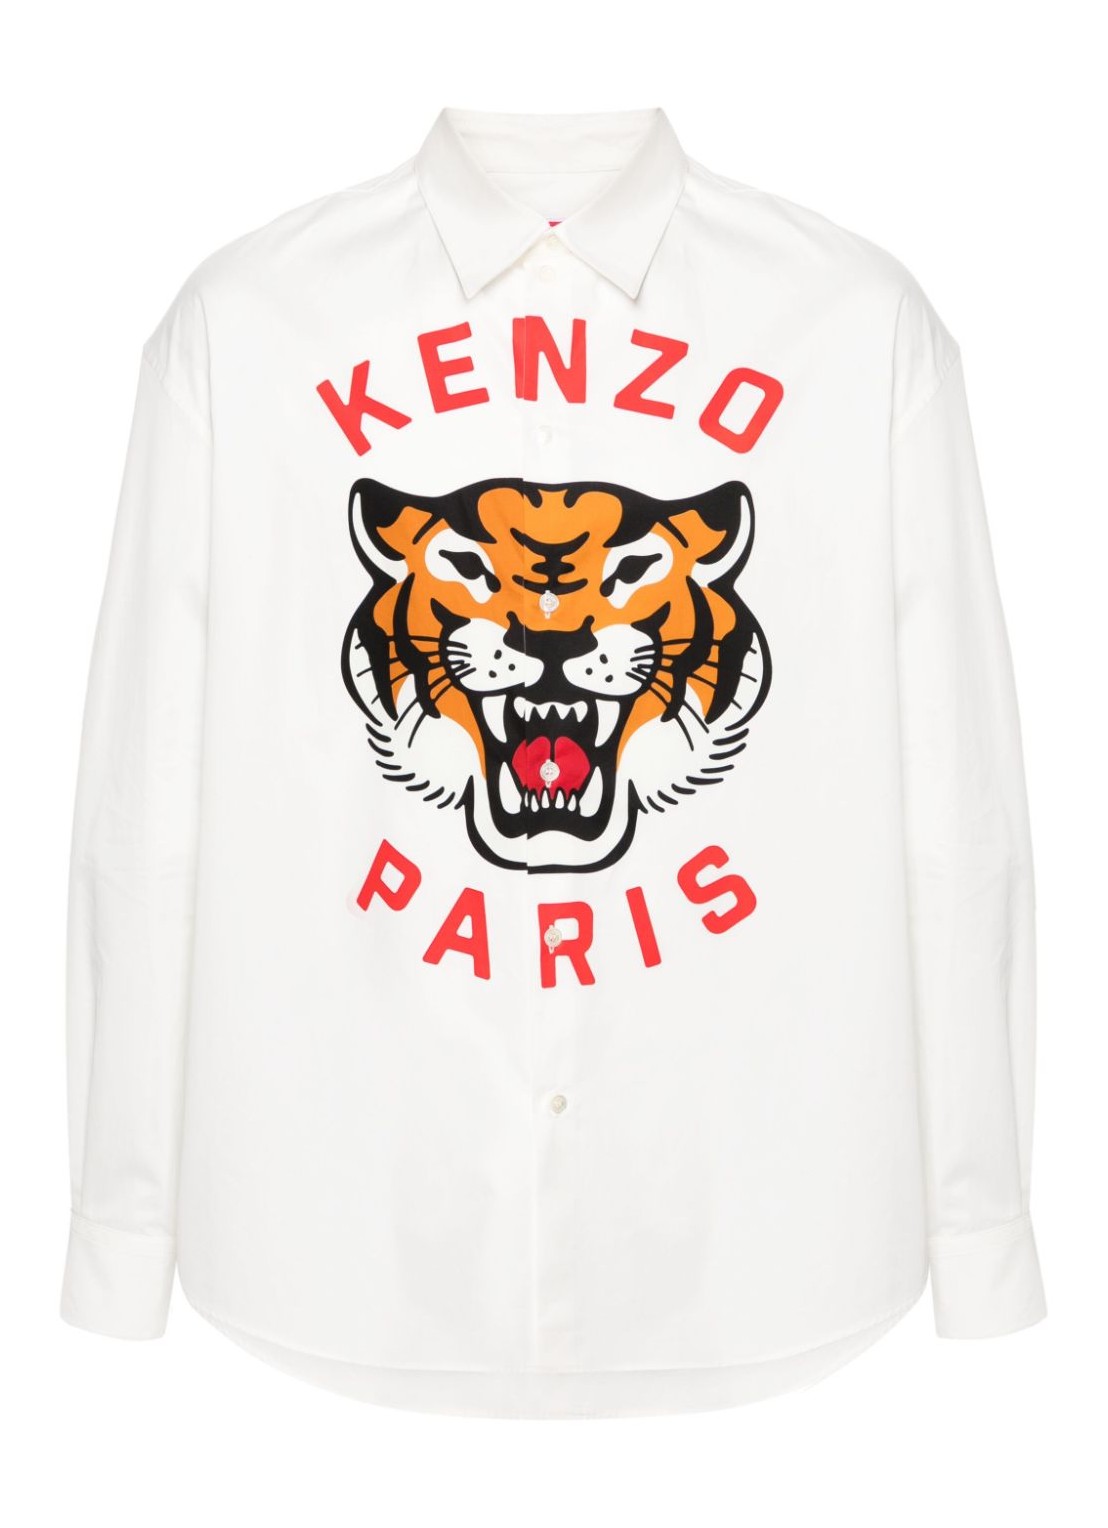 Camiseria kenzo shirt man kenzo lucky tiger shirt fe55ch4209p7 01 talla 43
 